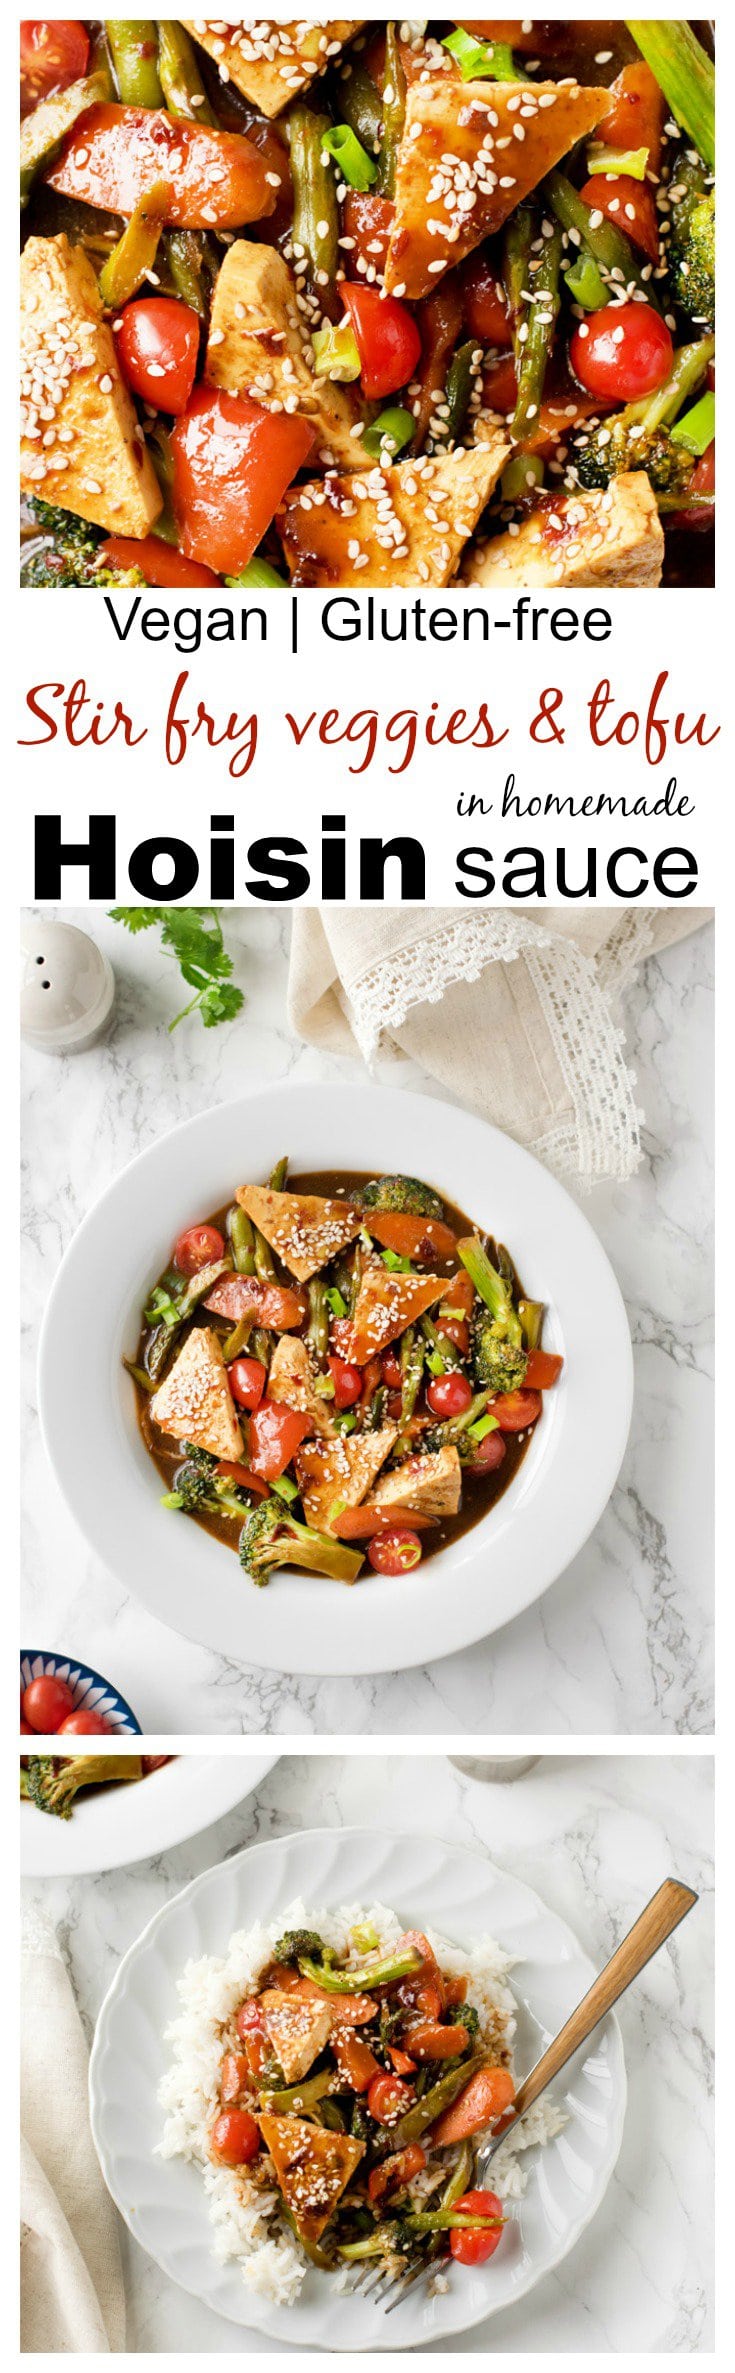 stir-fry-veggies-and-tofu-in-homemade-hoisin-sauce-vegan-glutenfree